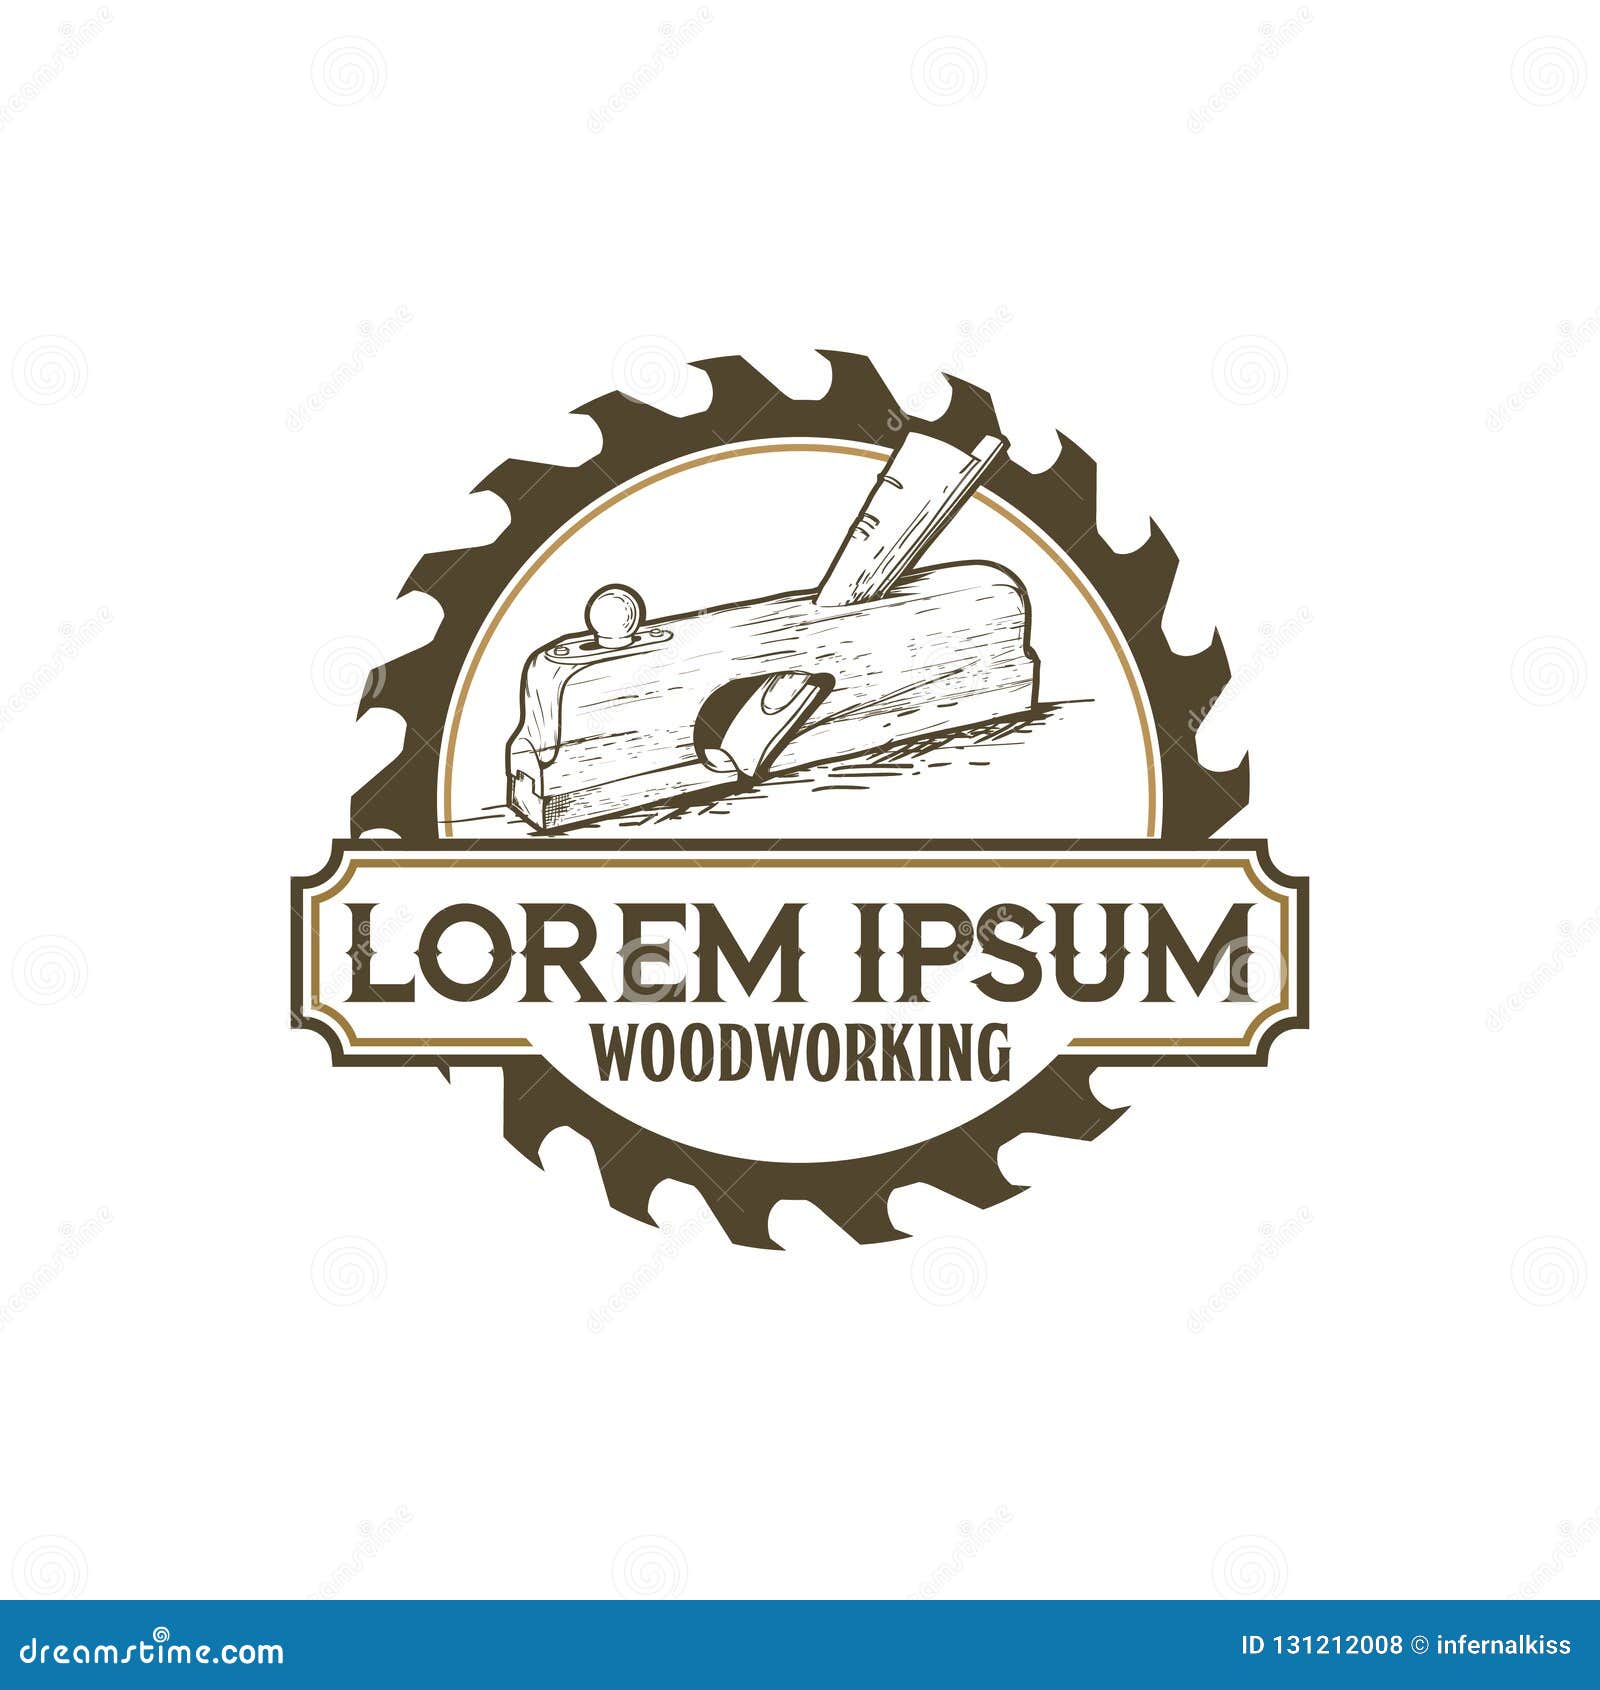 circular saw blade and wood hand plane  vintage style logo template